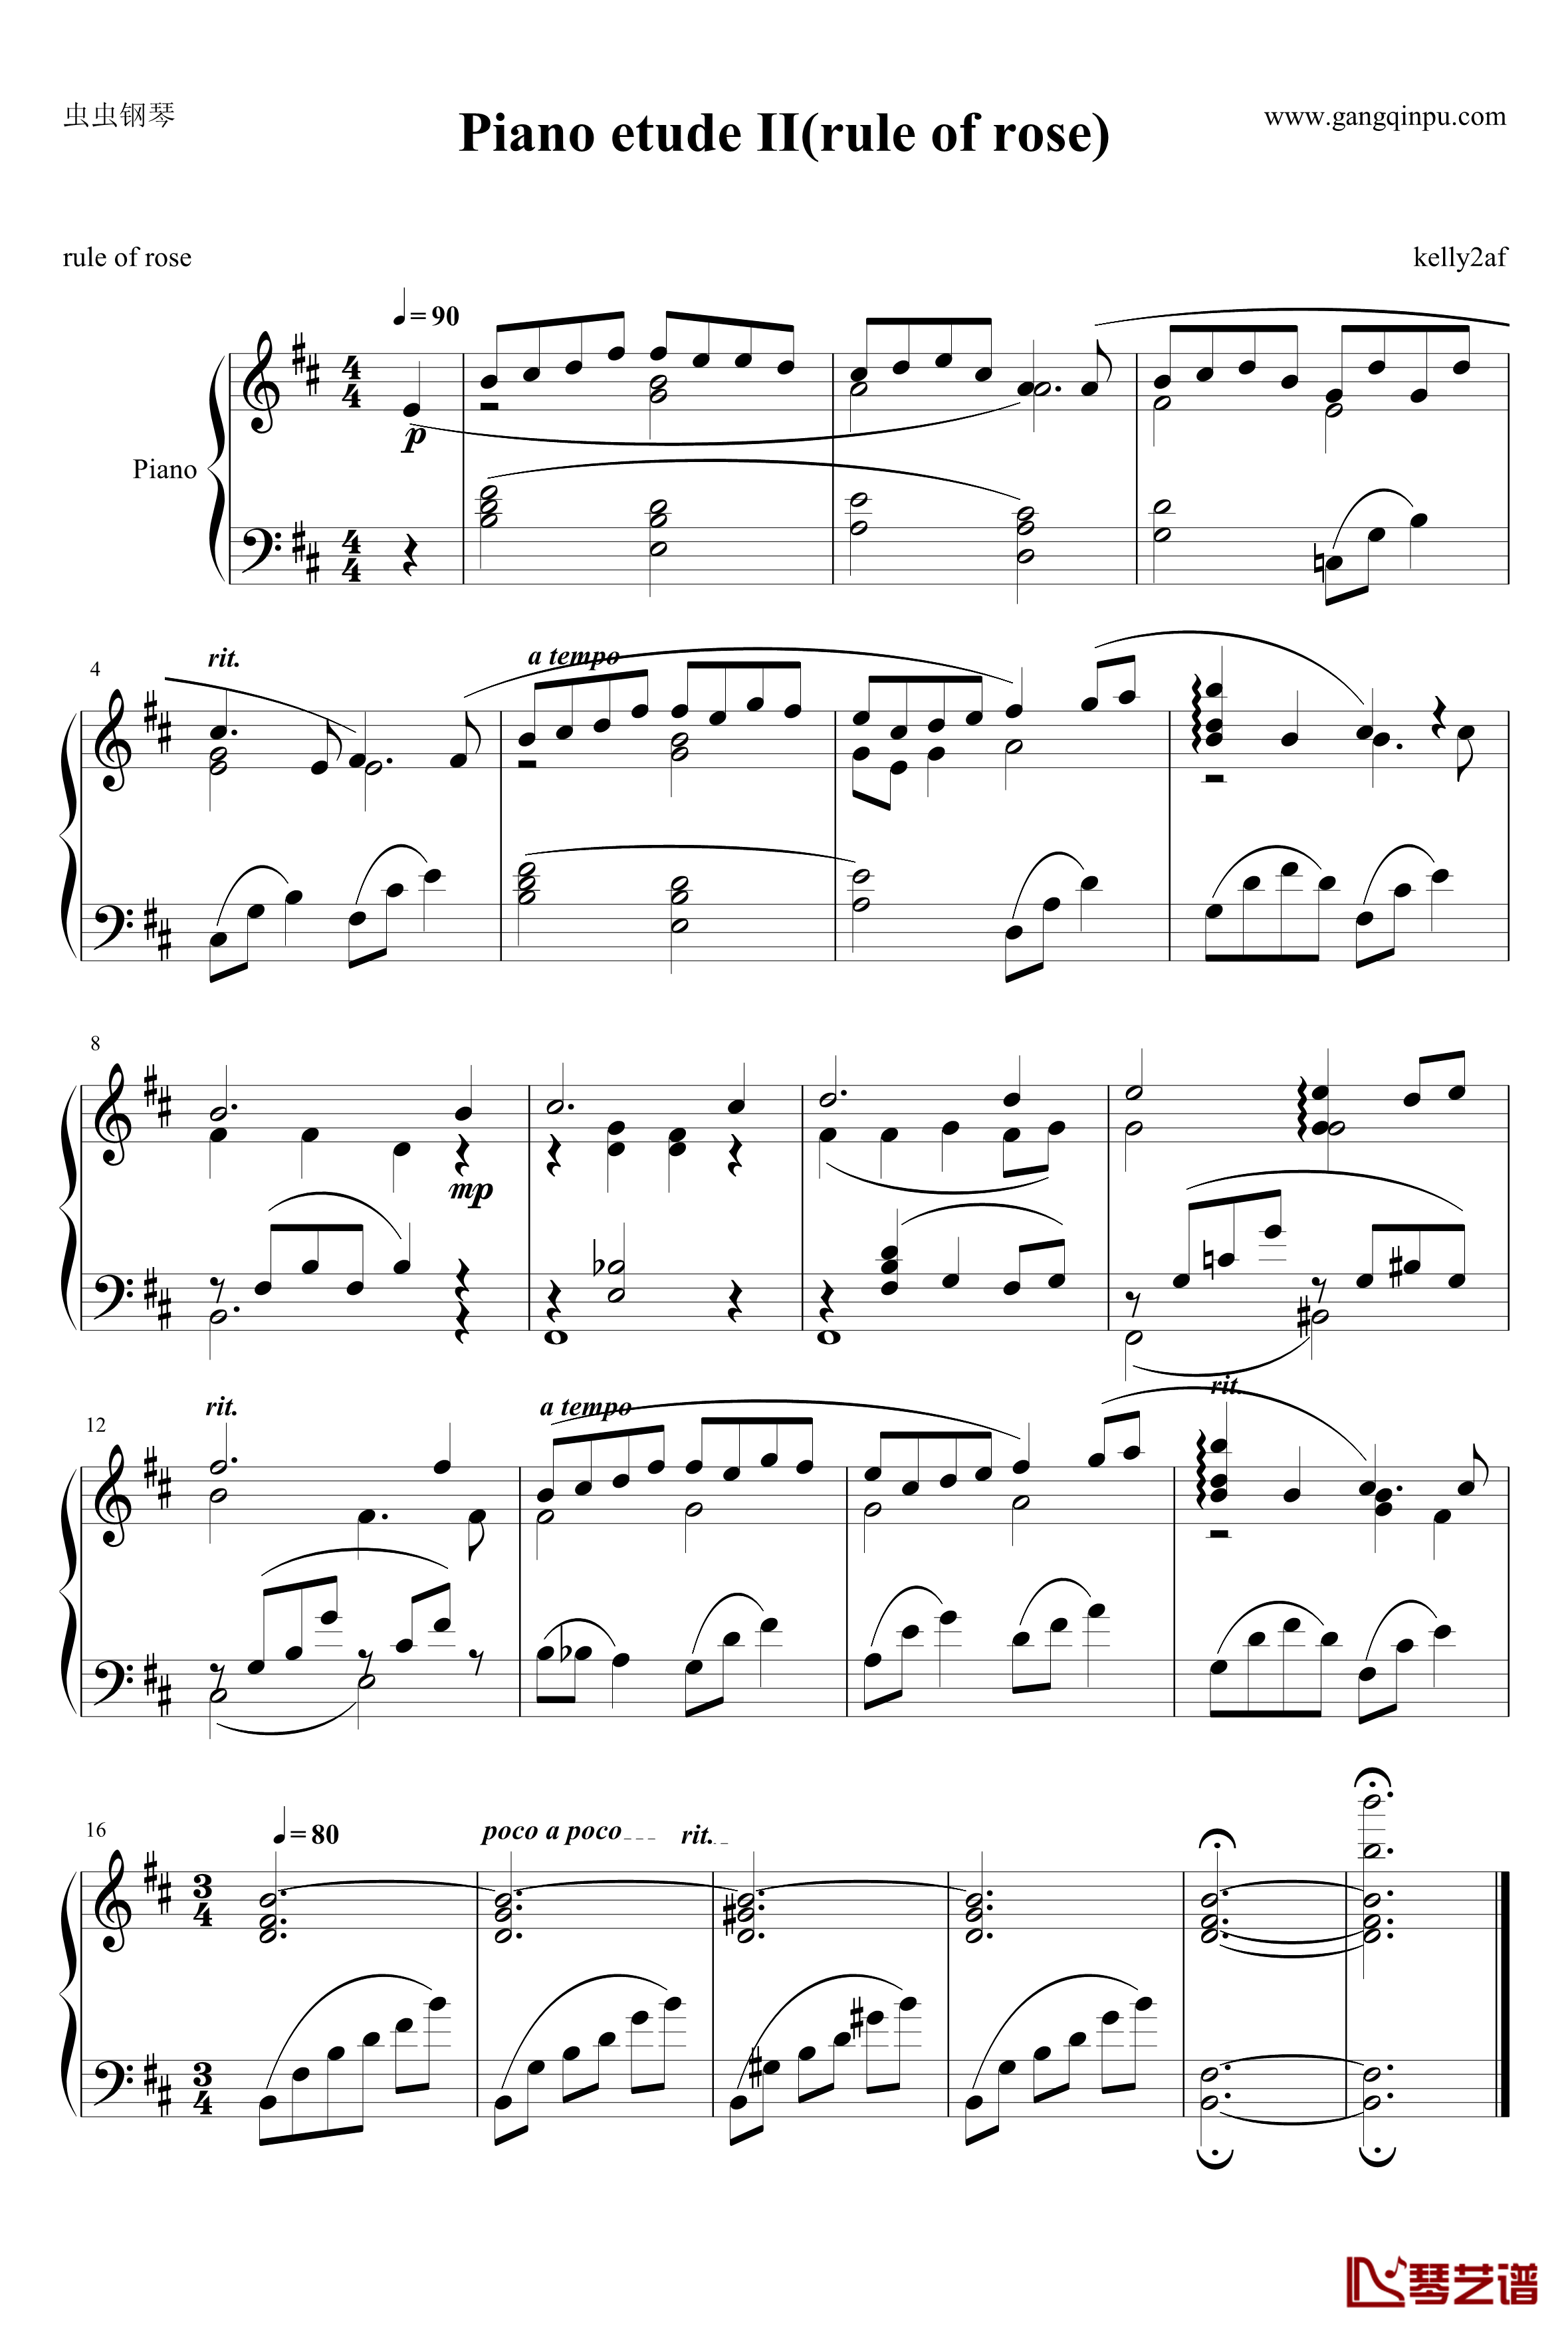 Piano etude II钢琴谱-rule of rose-蔷薇守则1